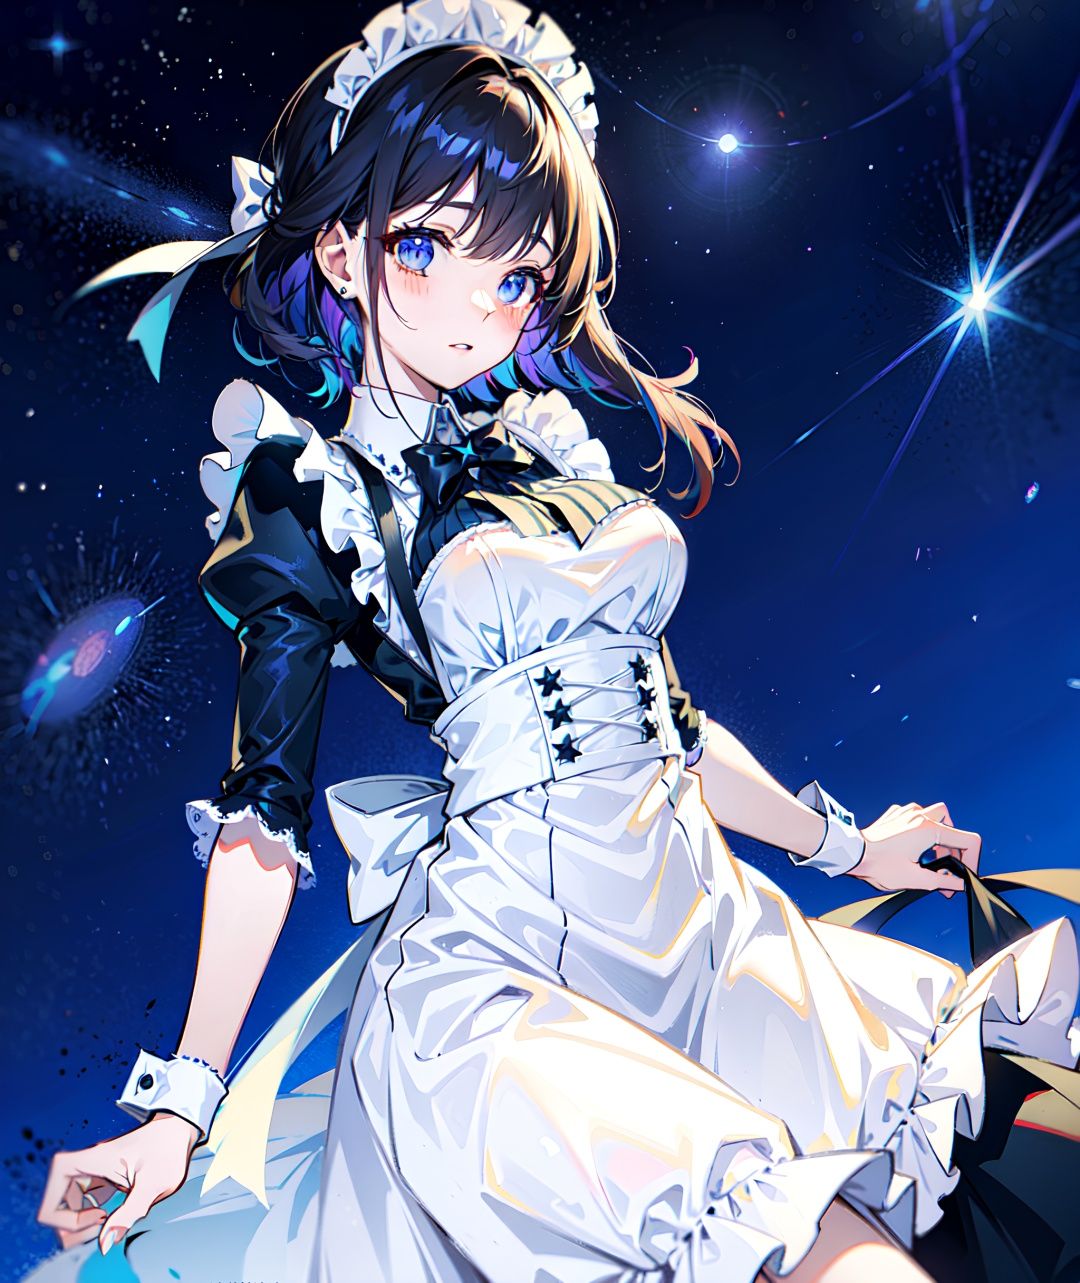 Starry backdrop + maid uniform + sexy